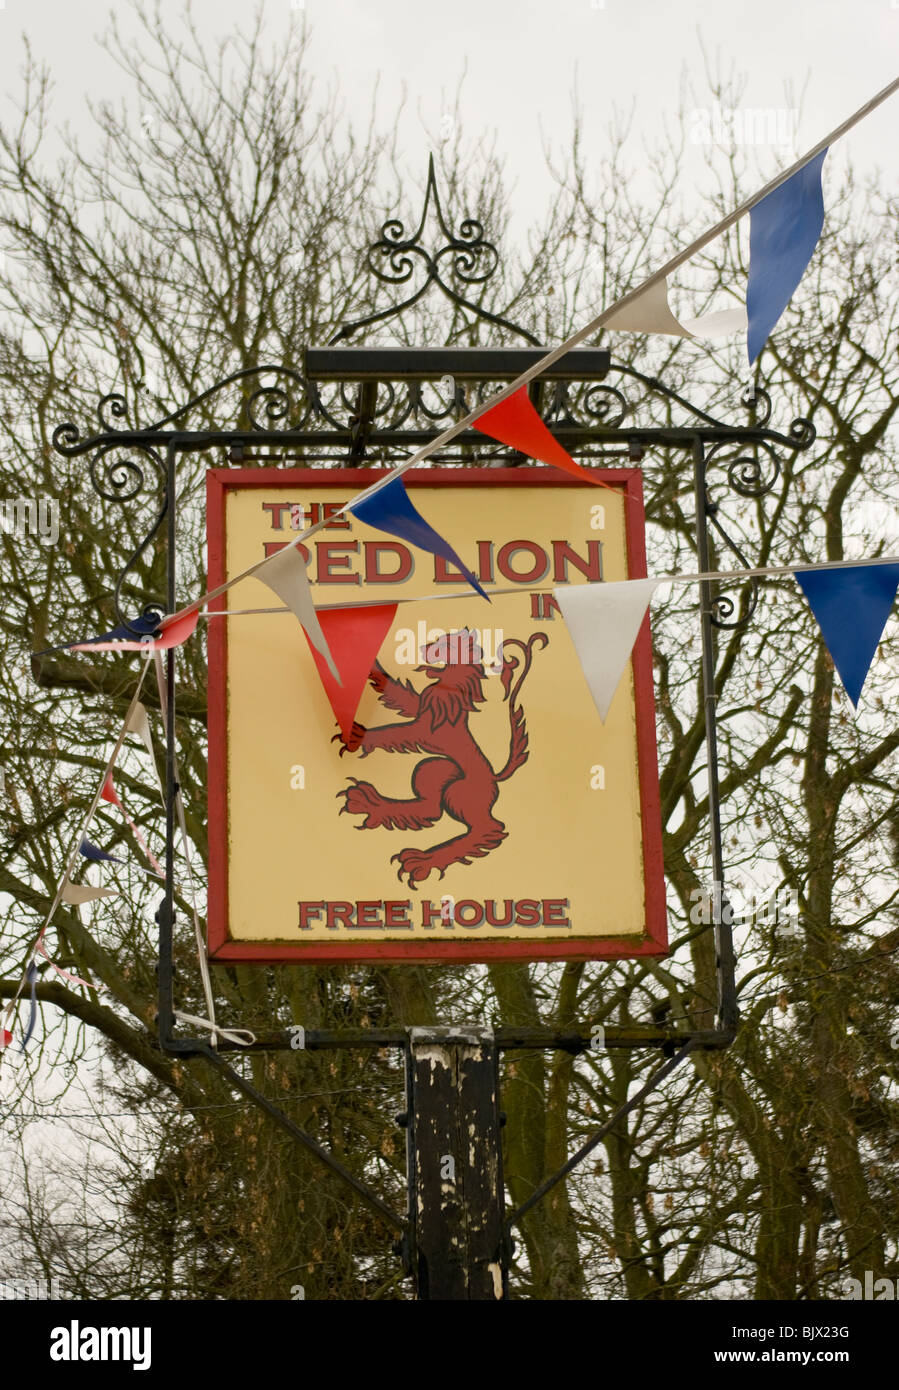 The Red Lion Public House Sign Bildeston Suffolk Stock Photo